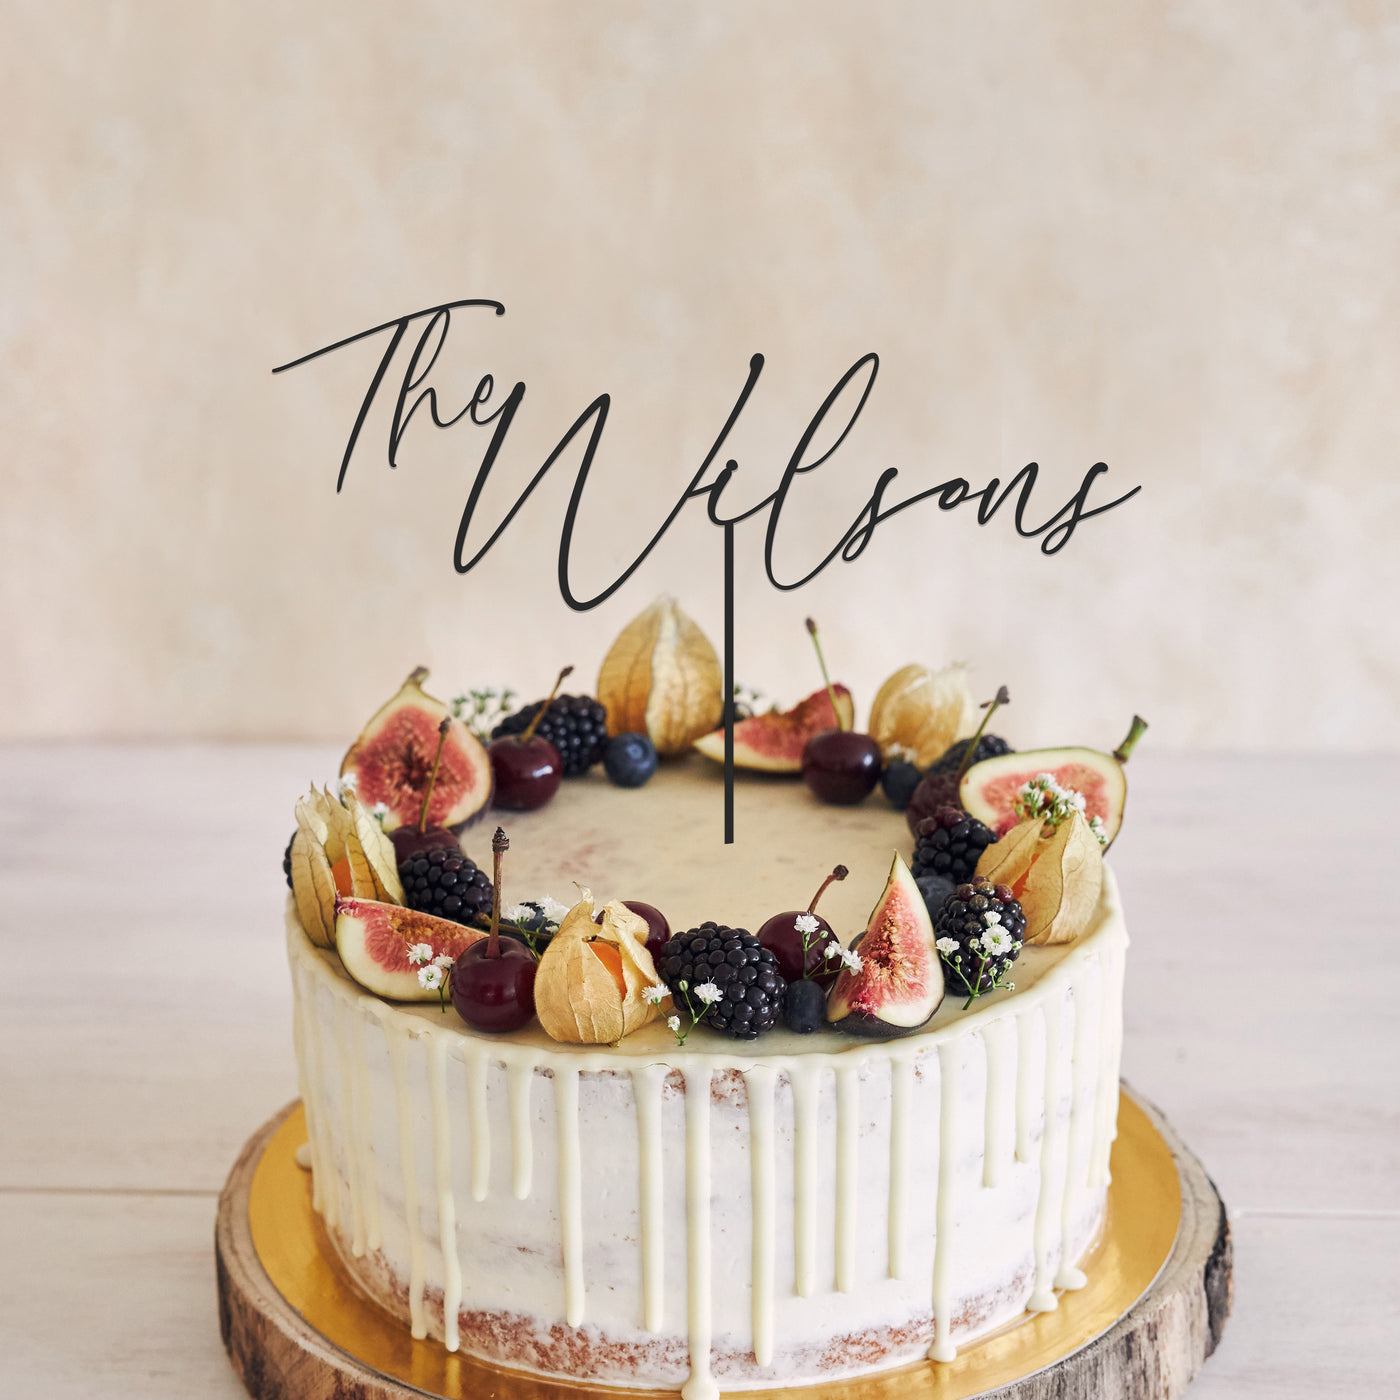 Gold Wedding Cake Topper - HM07